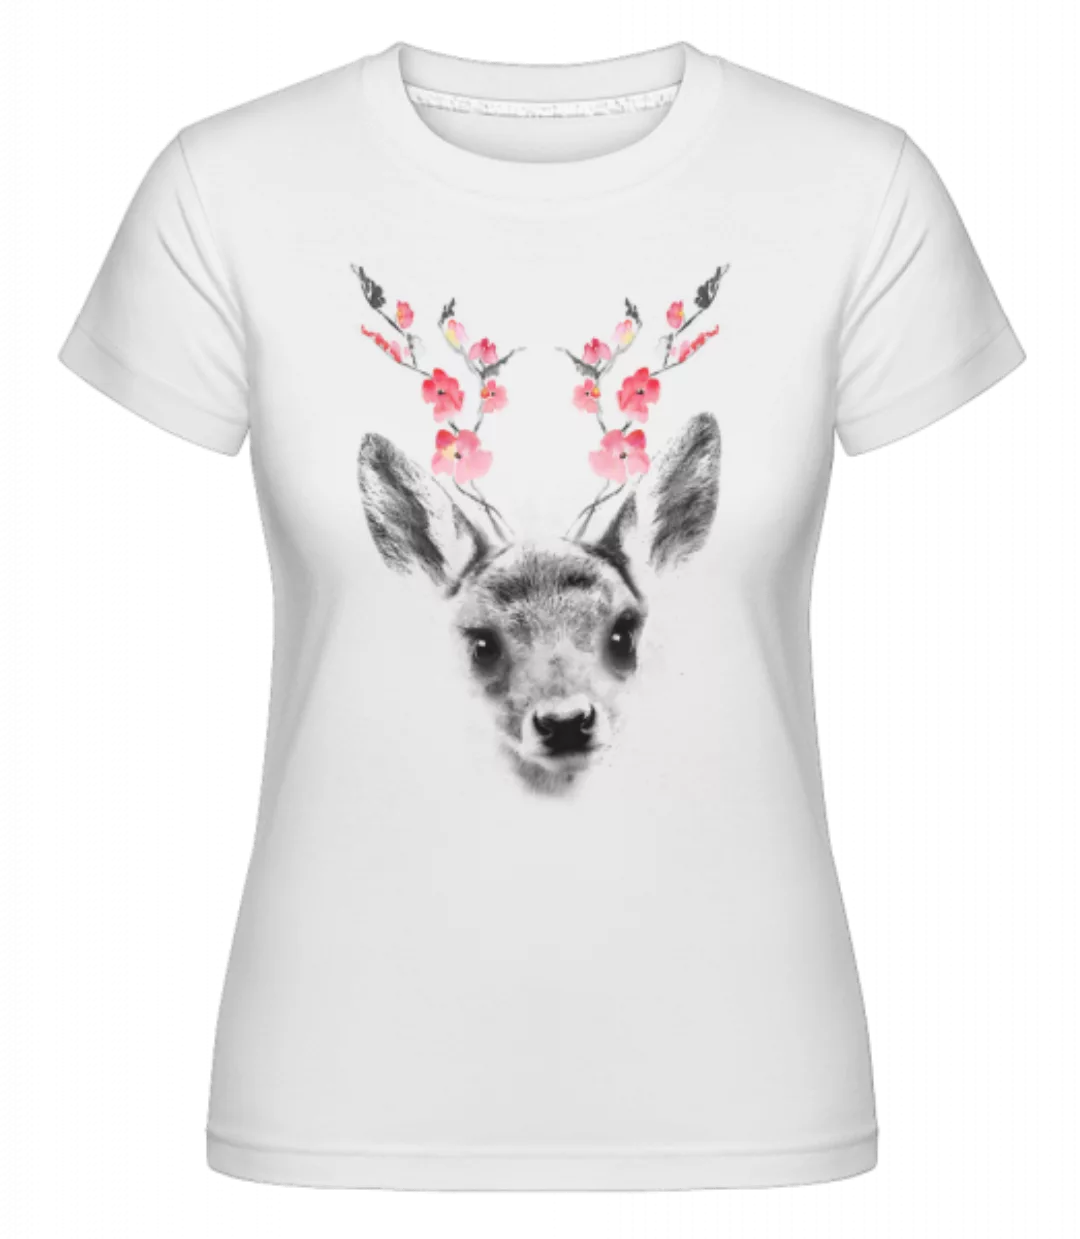 Frühlings Reh · Shirtinator Frauen T-Shirt günstig online kaufen